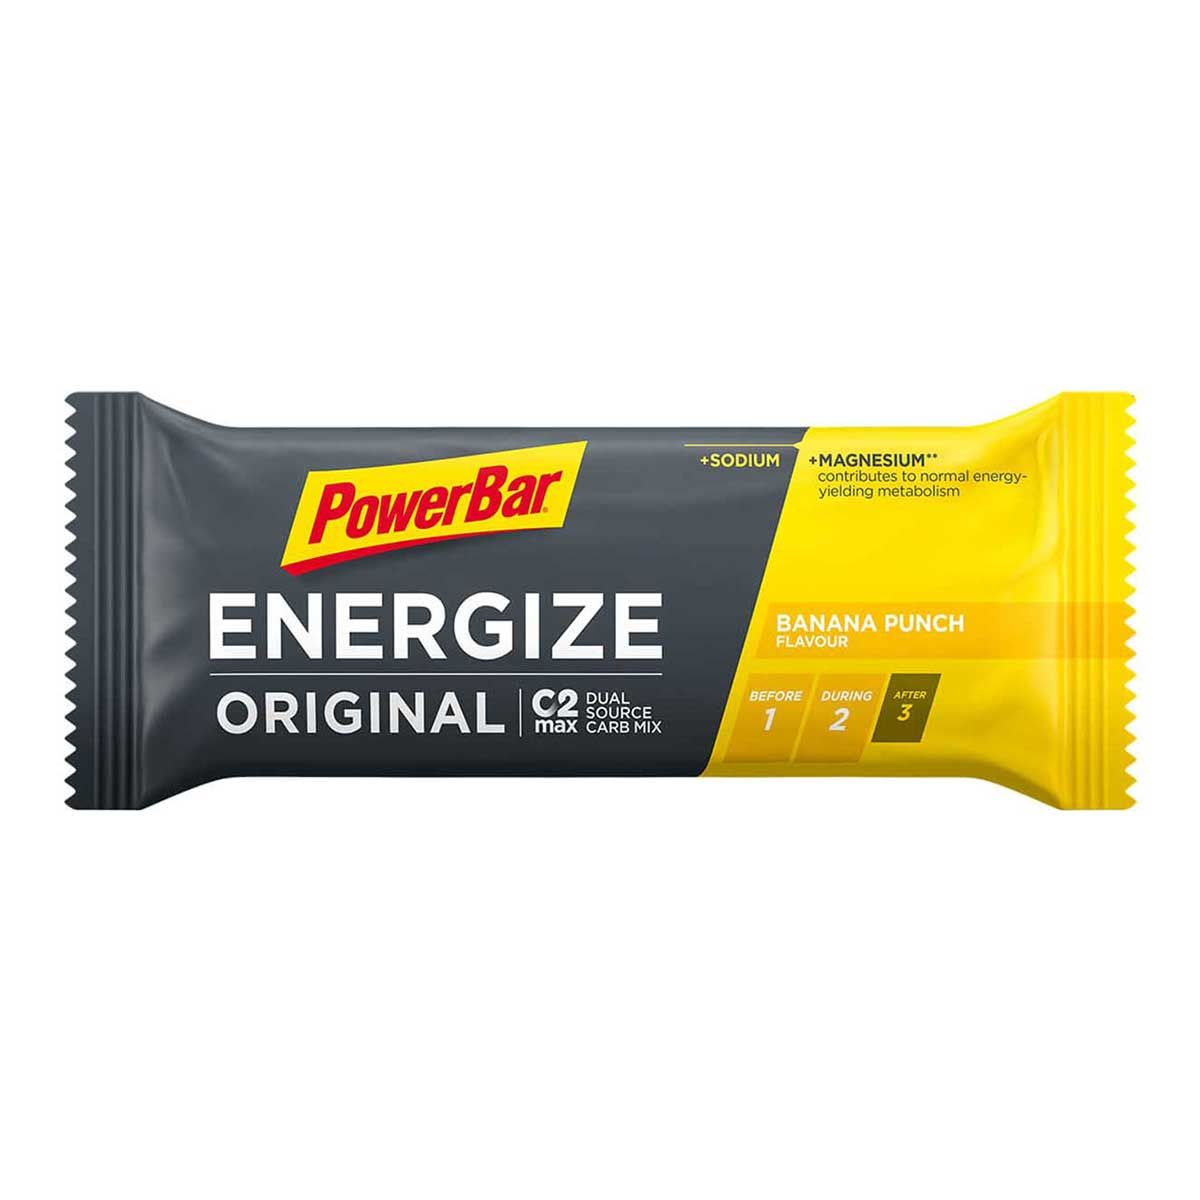 Powerbar Energize Original C2Max bar - Banana punch